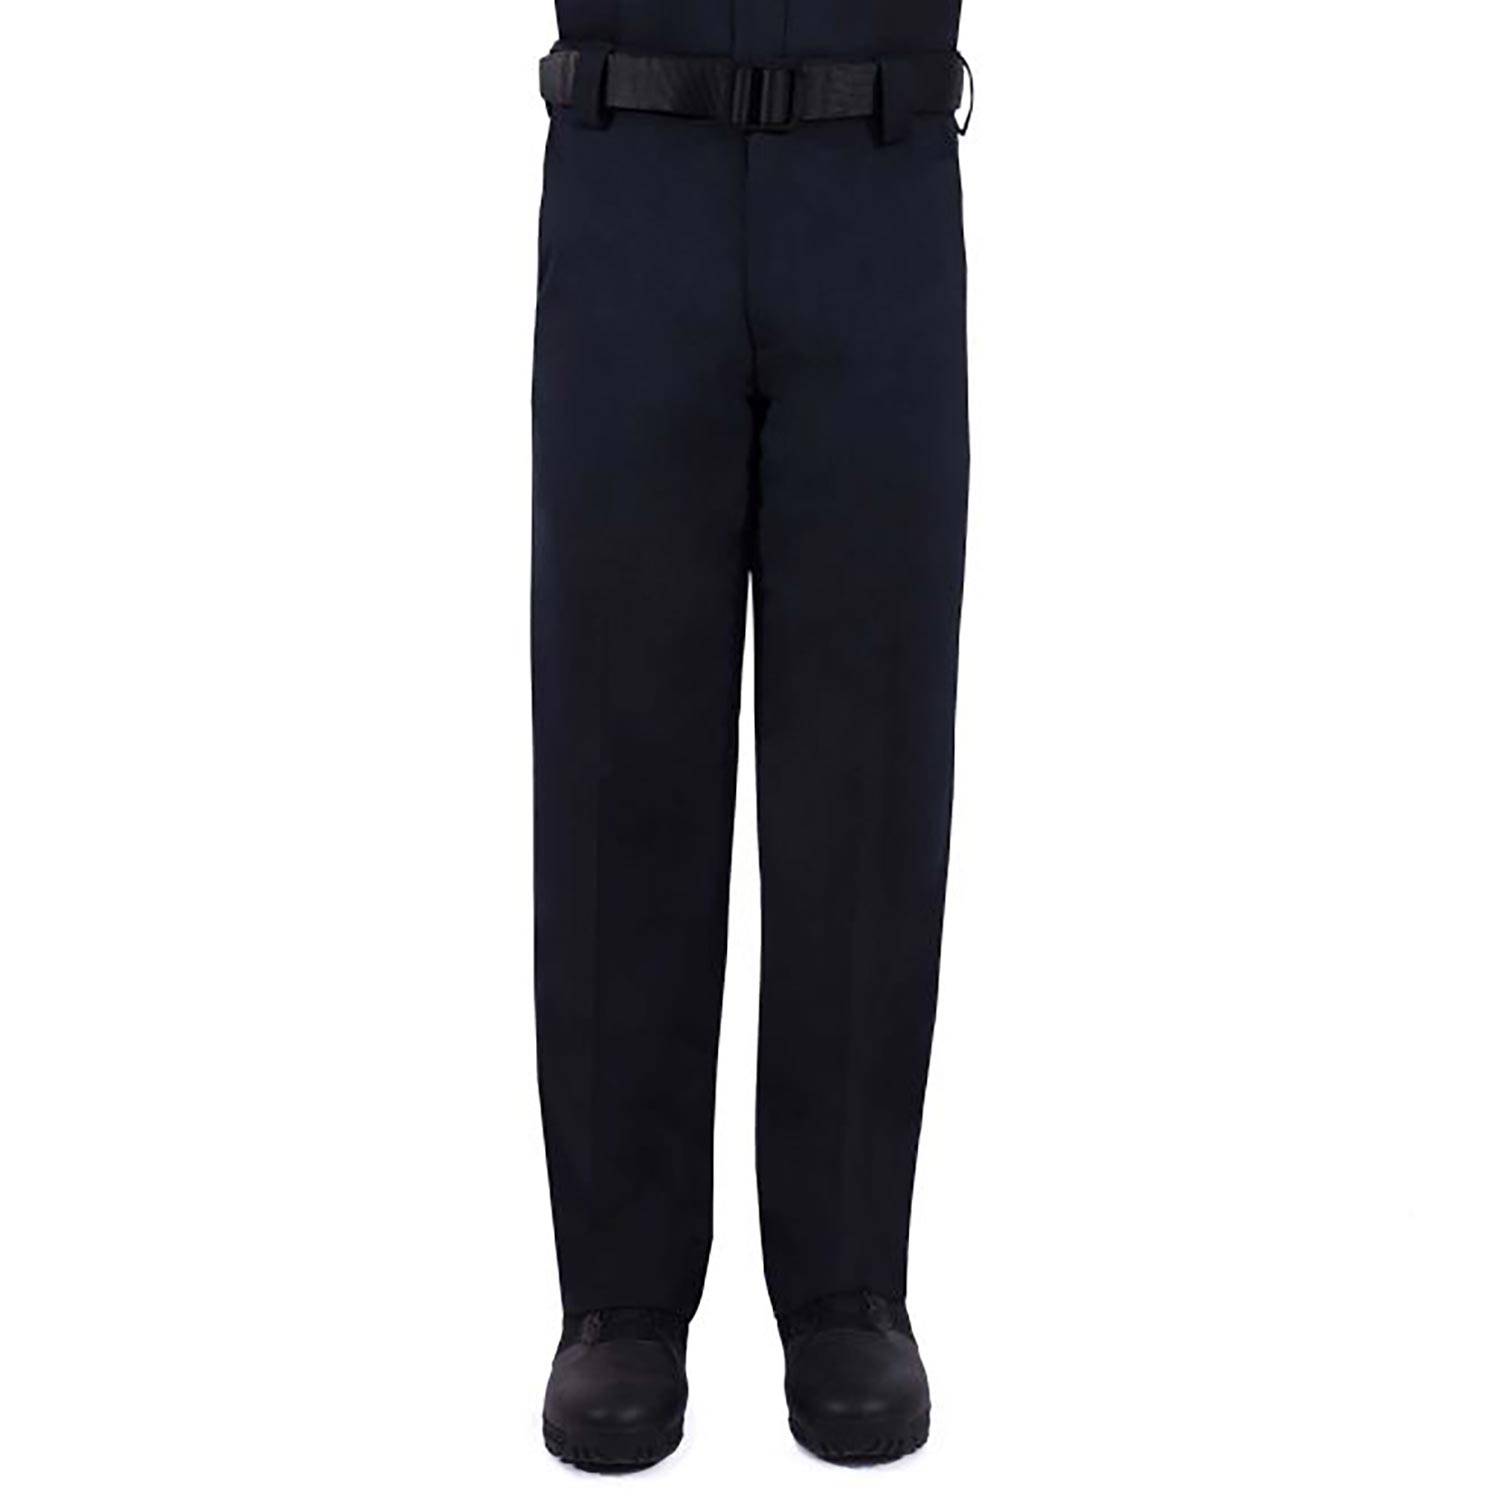 Blauer - 8810T - StreetGear Flex Side Pocket Cotton Blend Pants - Police  cargo pants with stretch